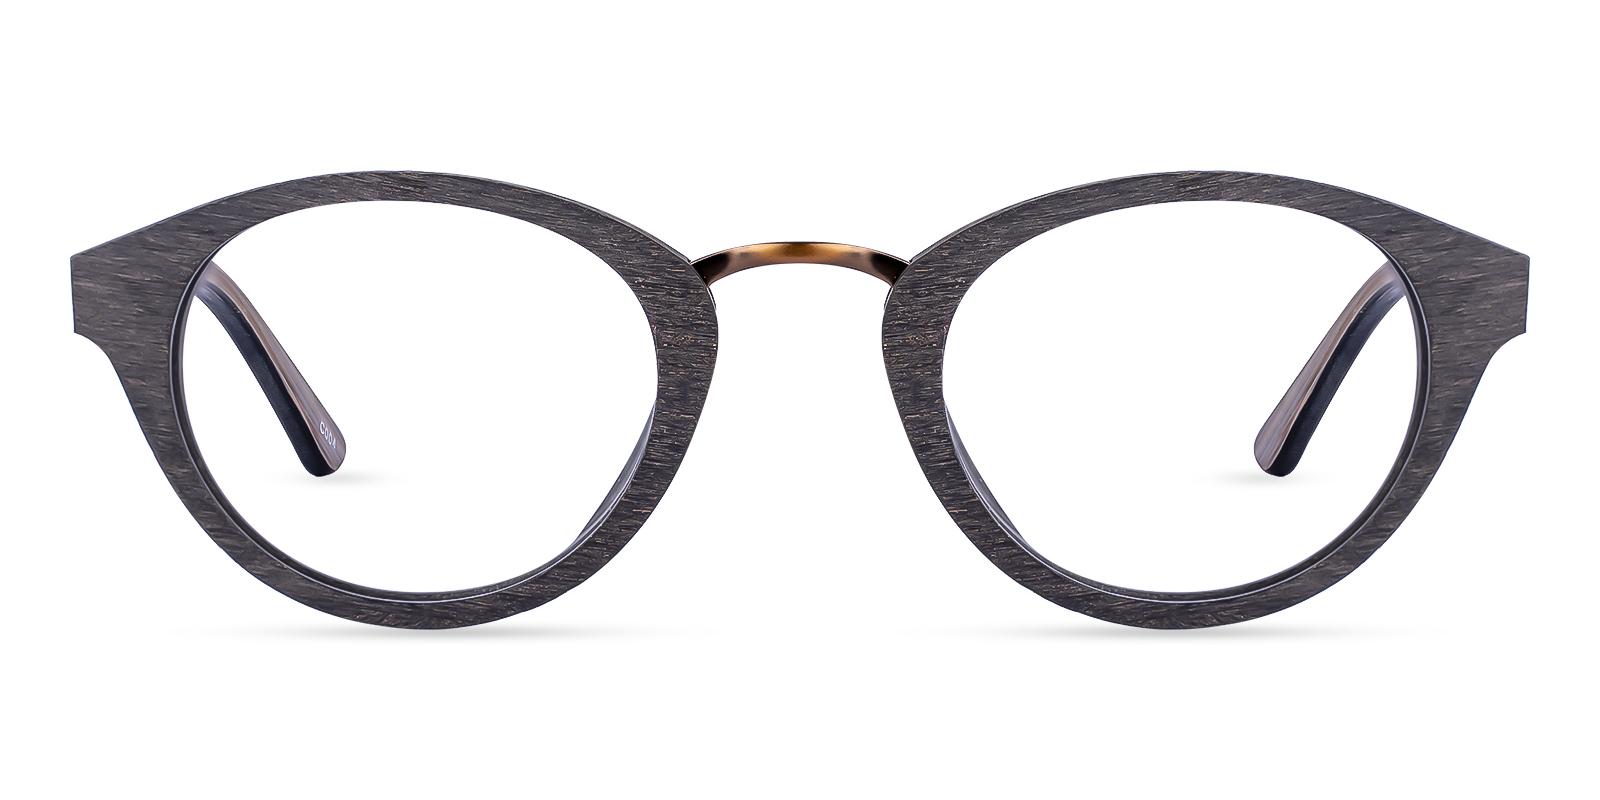 New Haven Brown Acetate Eyeglasses , SpringHinges , UniversalBridgeFit Frames from ABBE Glasses